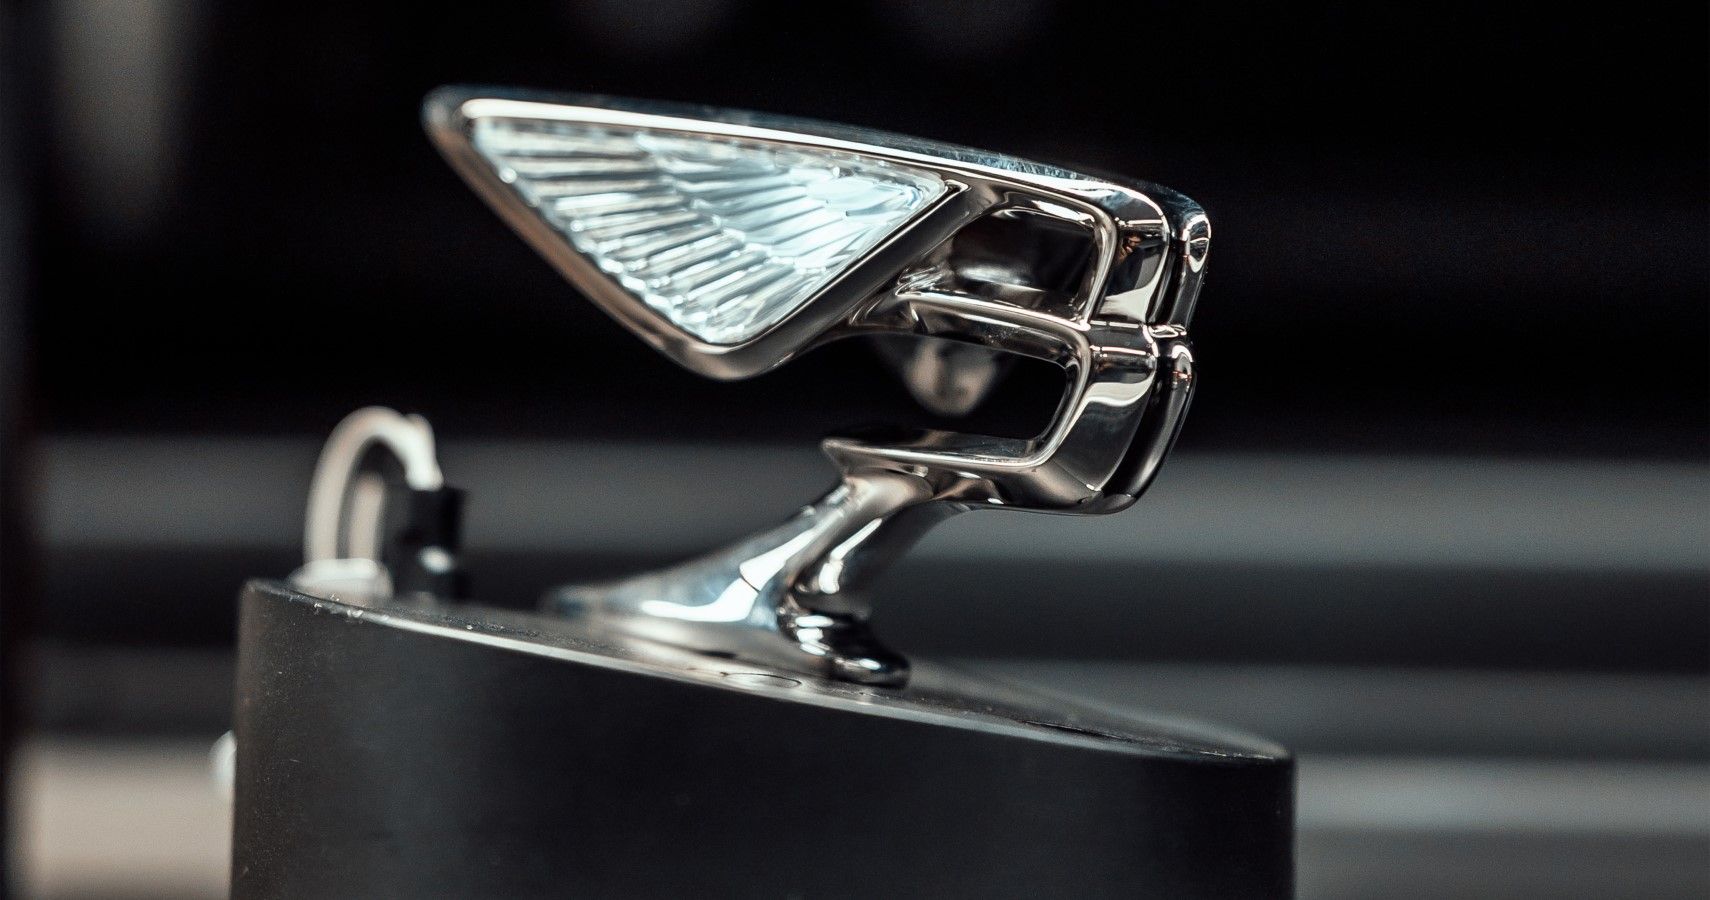 Bentley hood ornament has glow-up wings